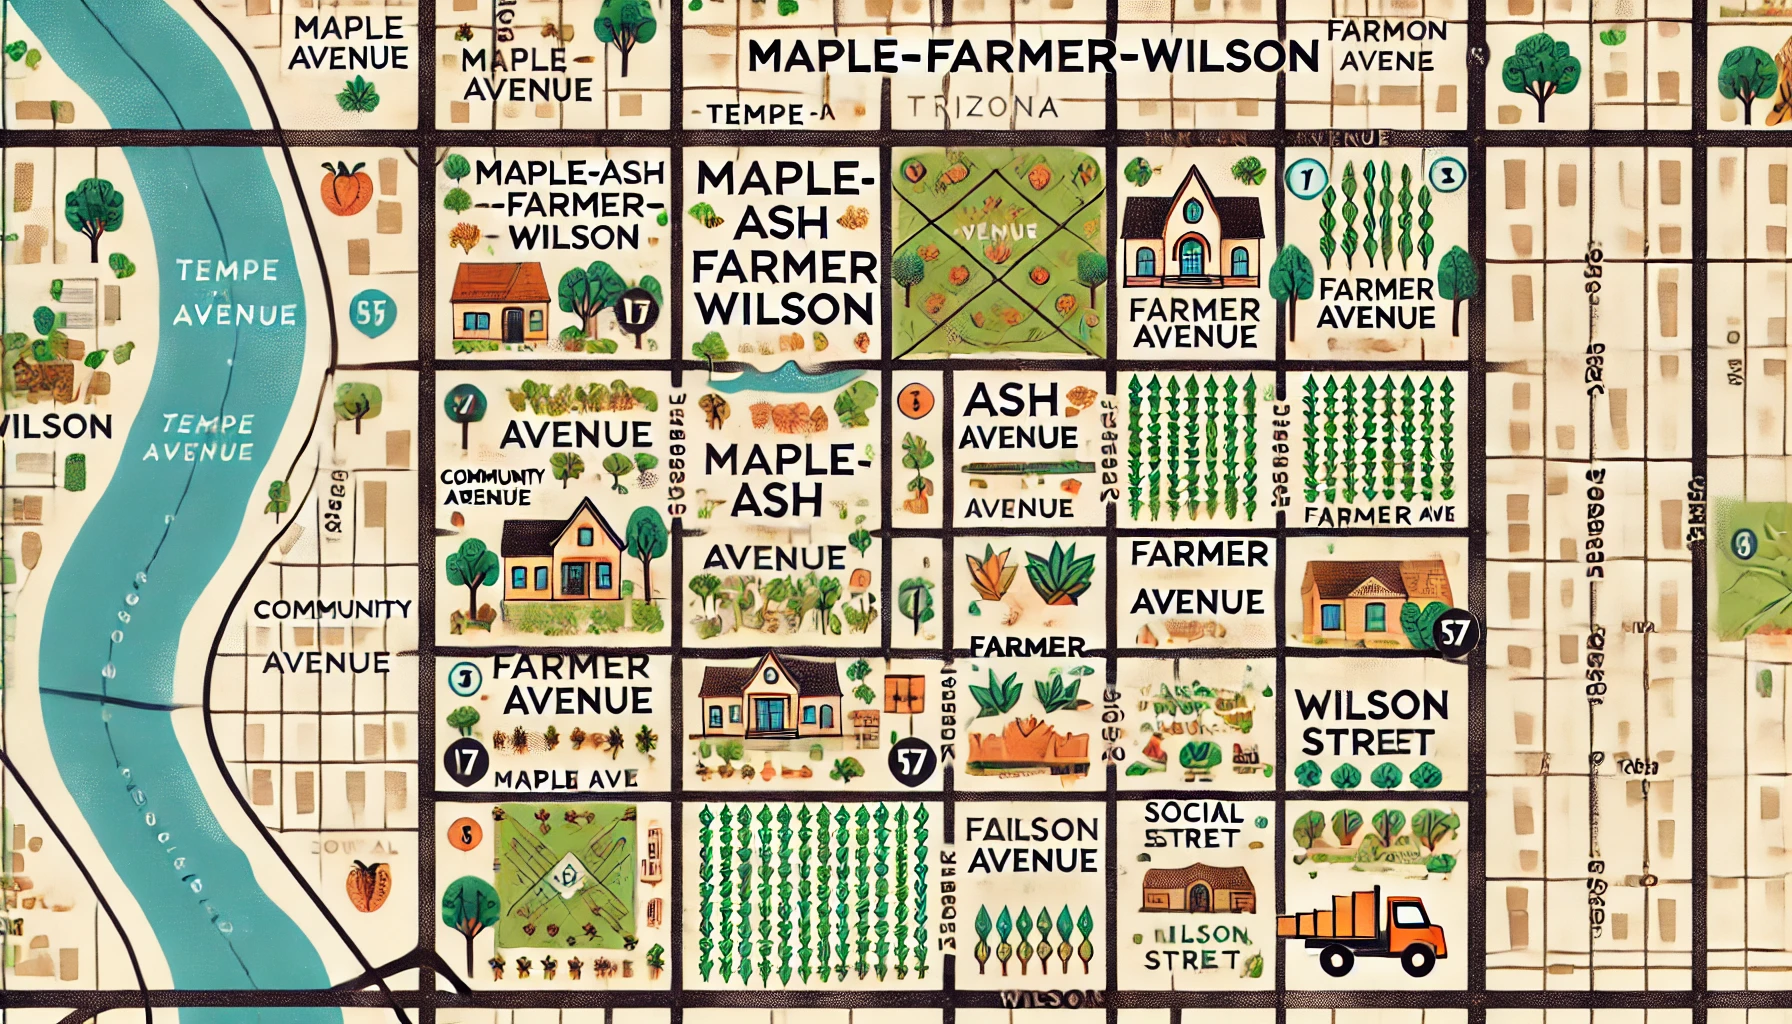 Maple-Ash-Farmer-Wilson (MAFW) Project: A 21st Century Anarchist Initiative